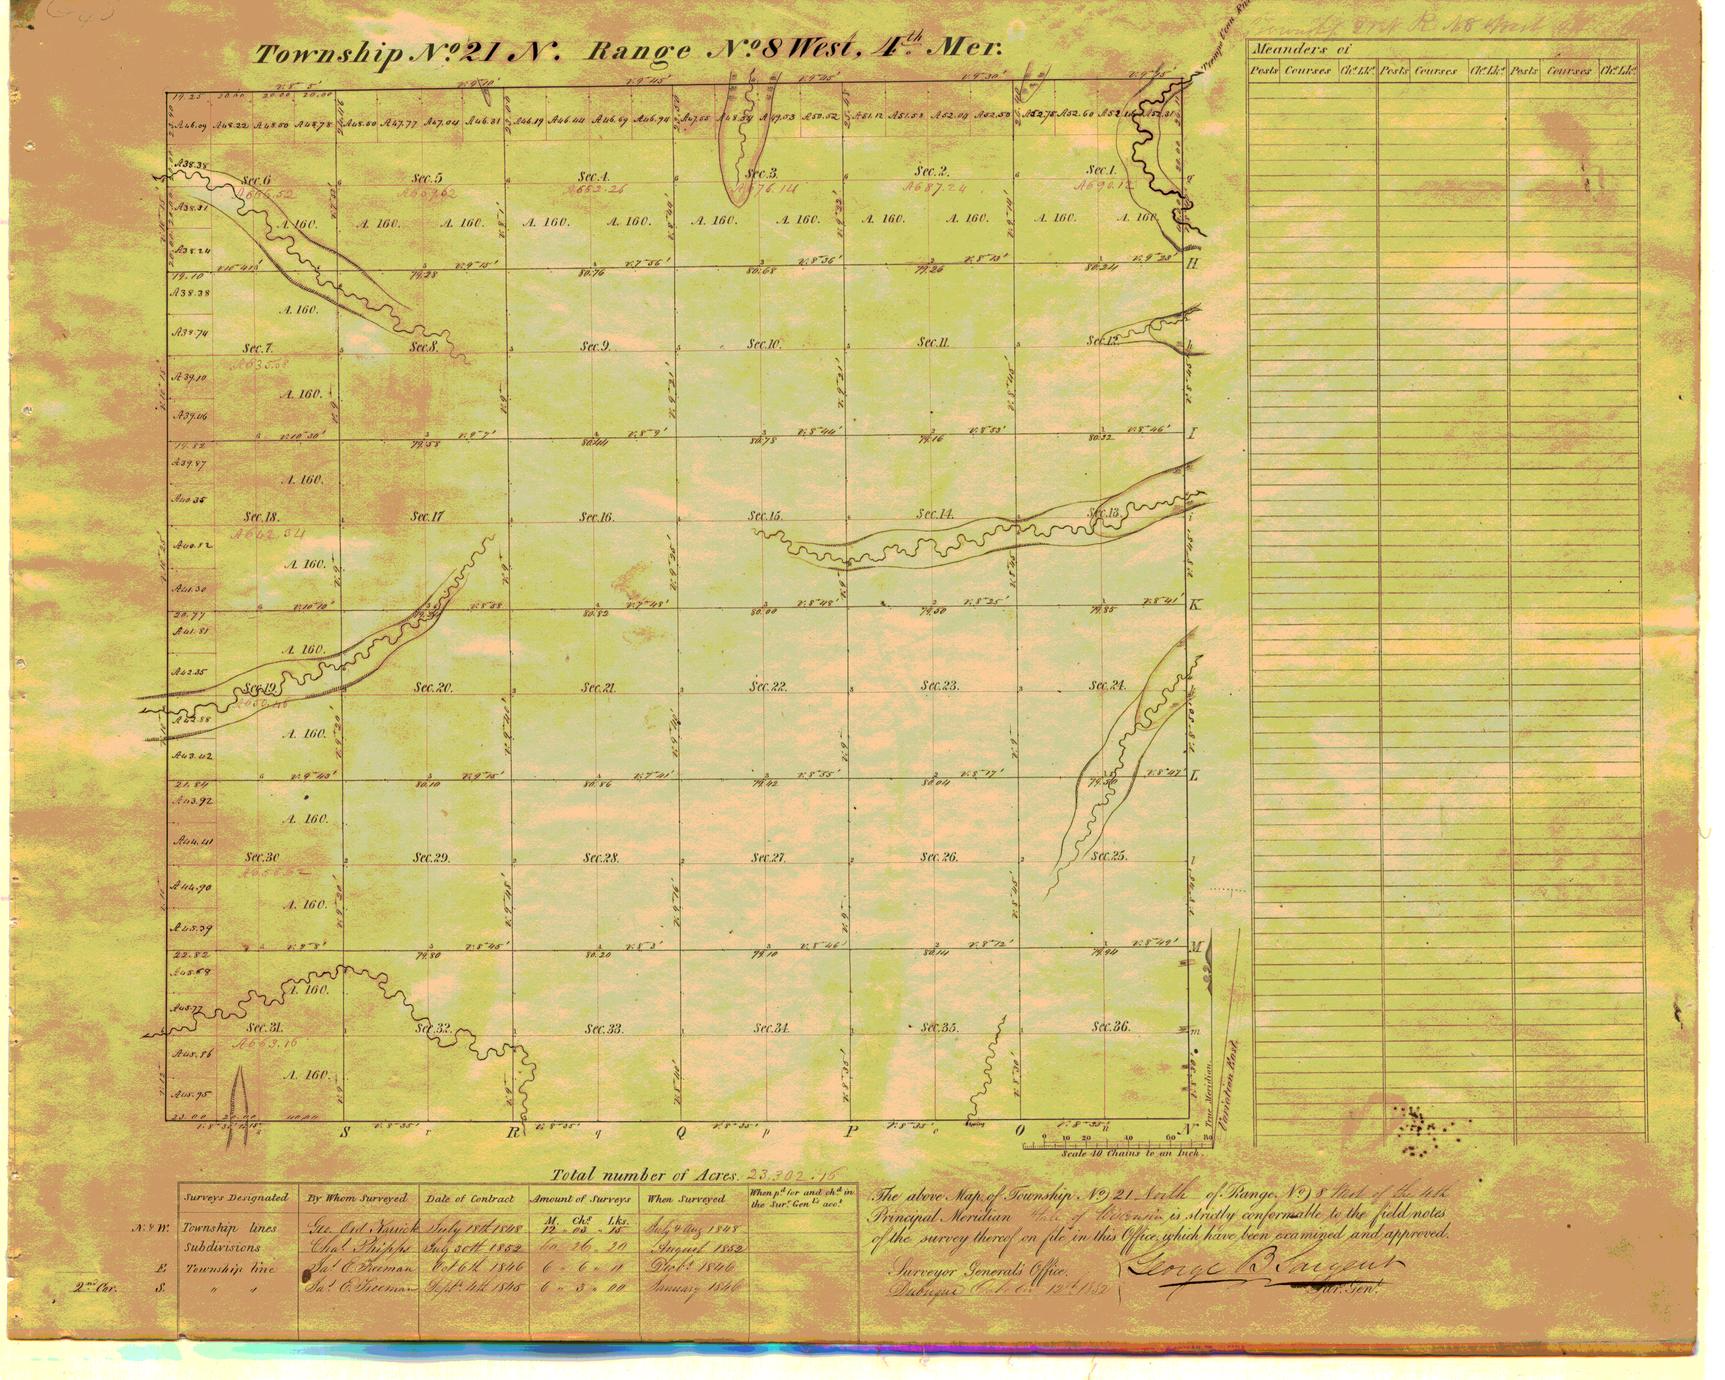 [Public Land Survey System map: Wisconsin Township 21 North, Range 08 West]